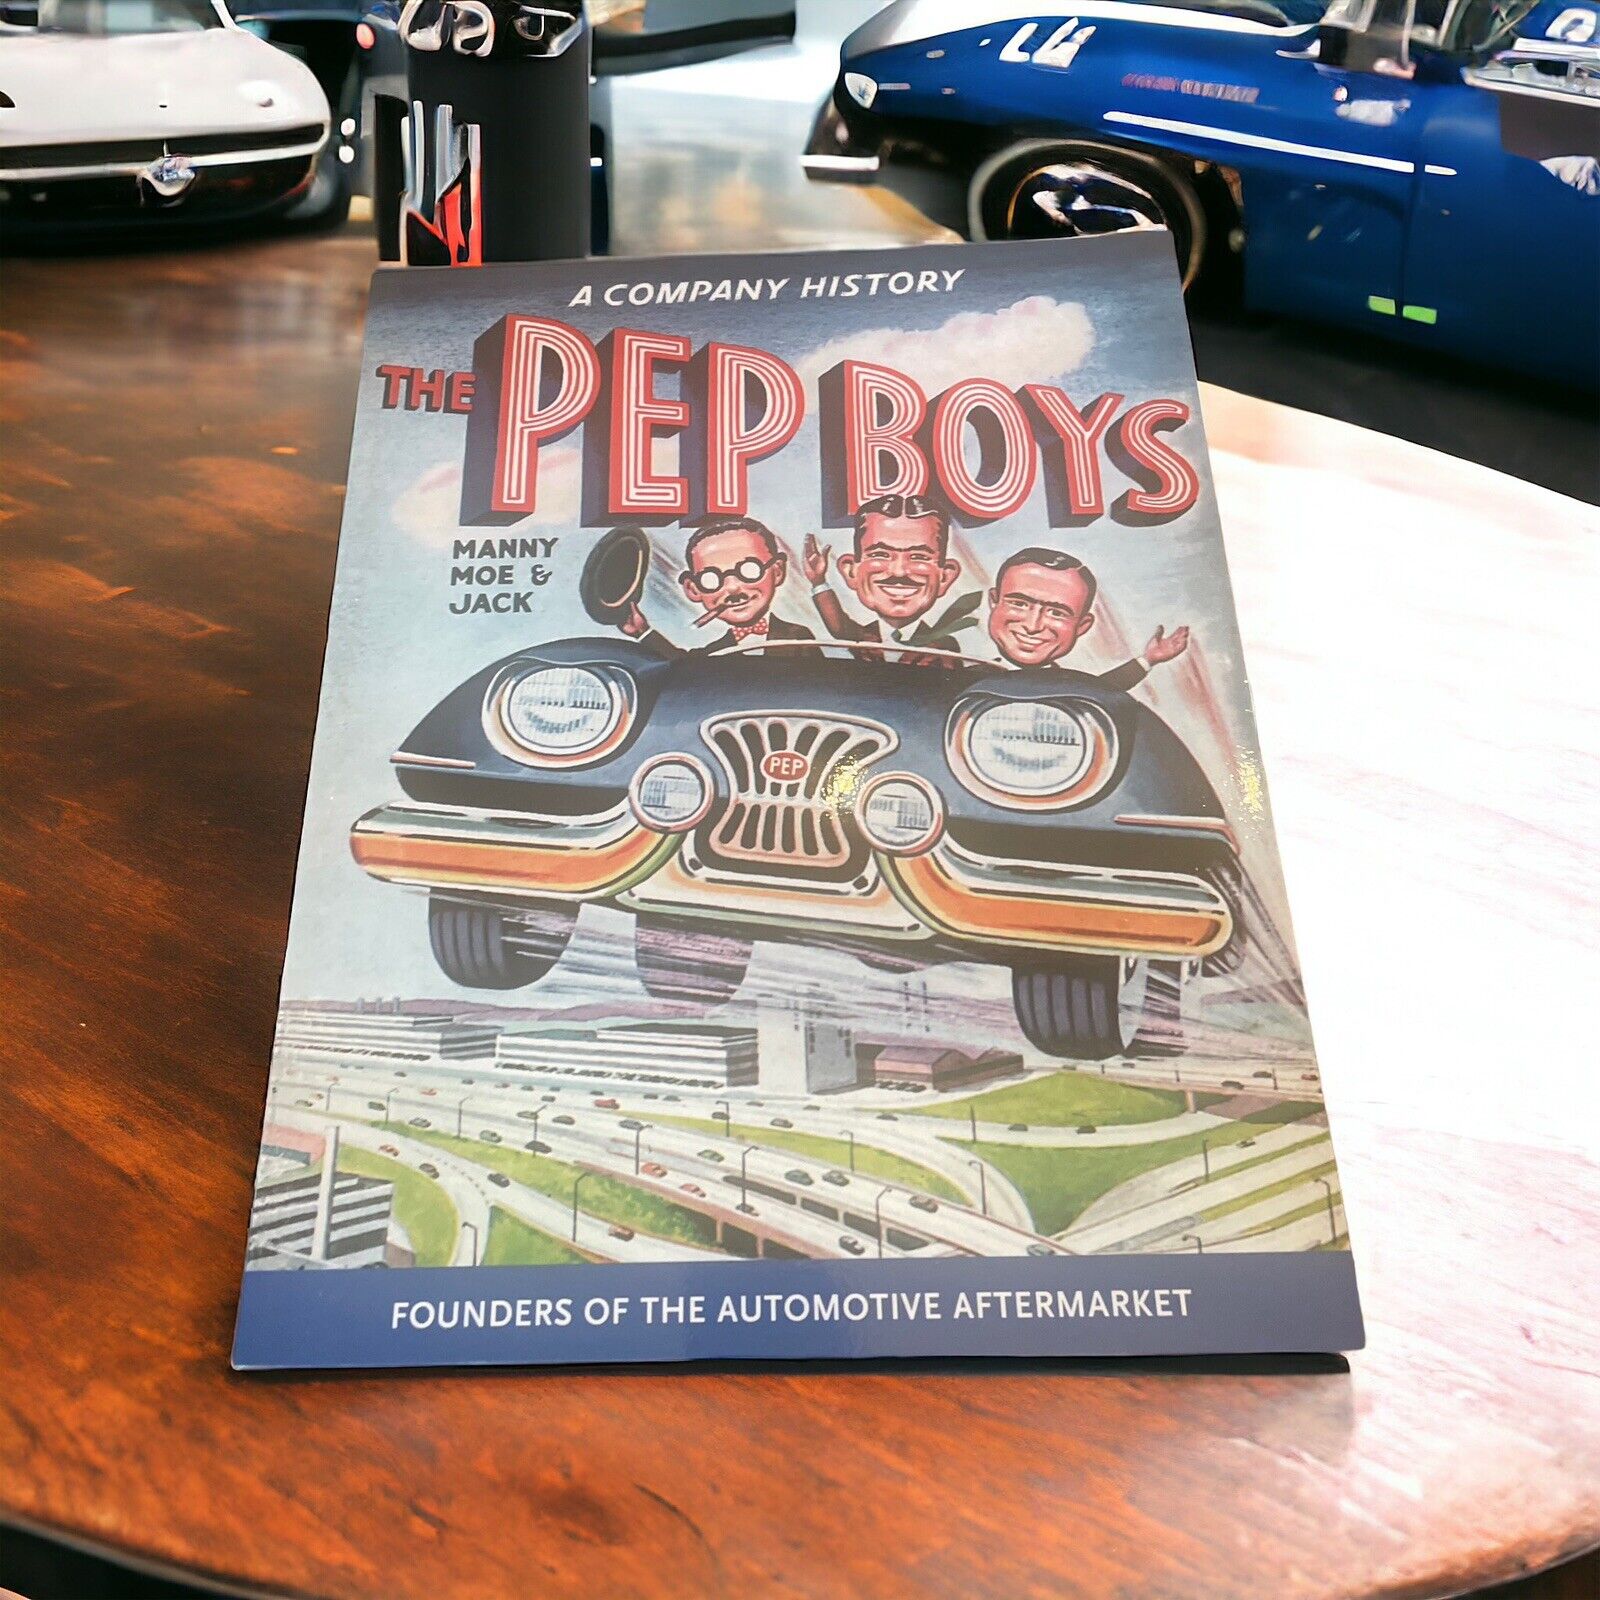 The Pep Boys, Manny Moe & Jack: A Company History, by Marian Calabro, SC